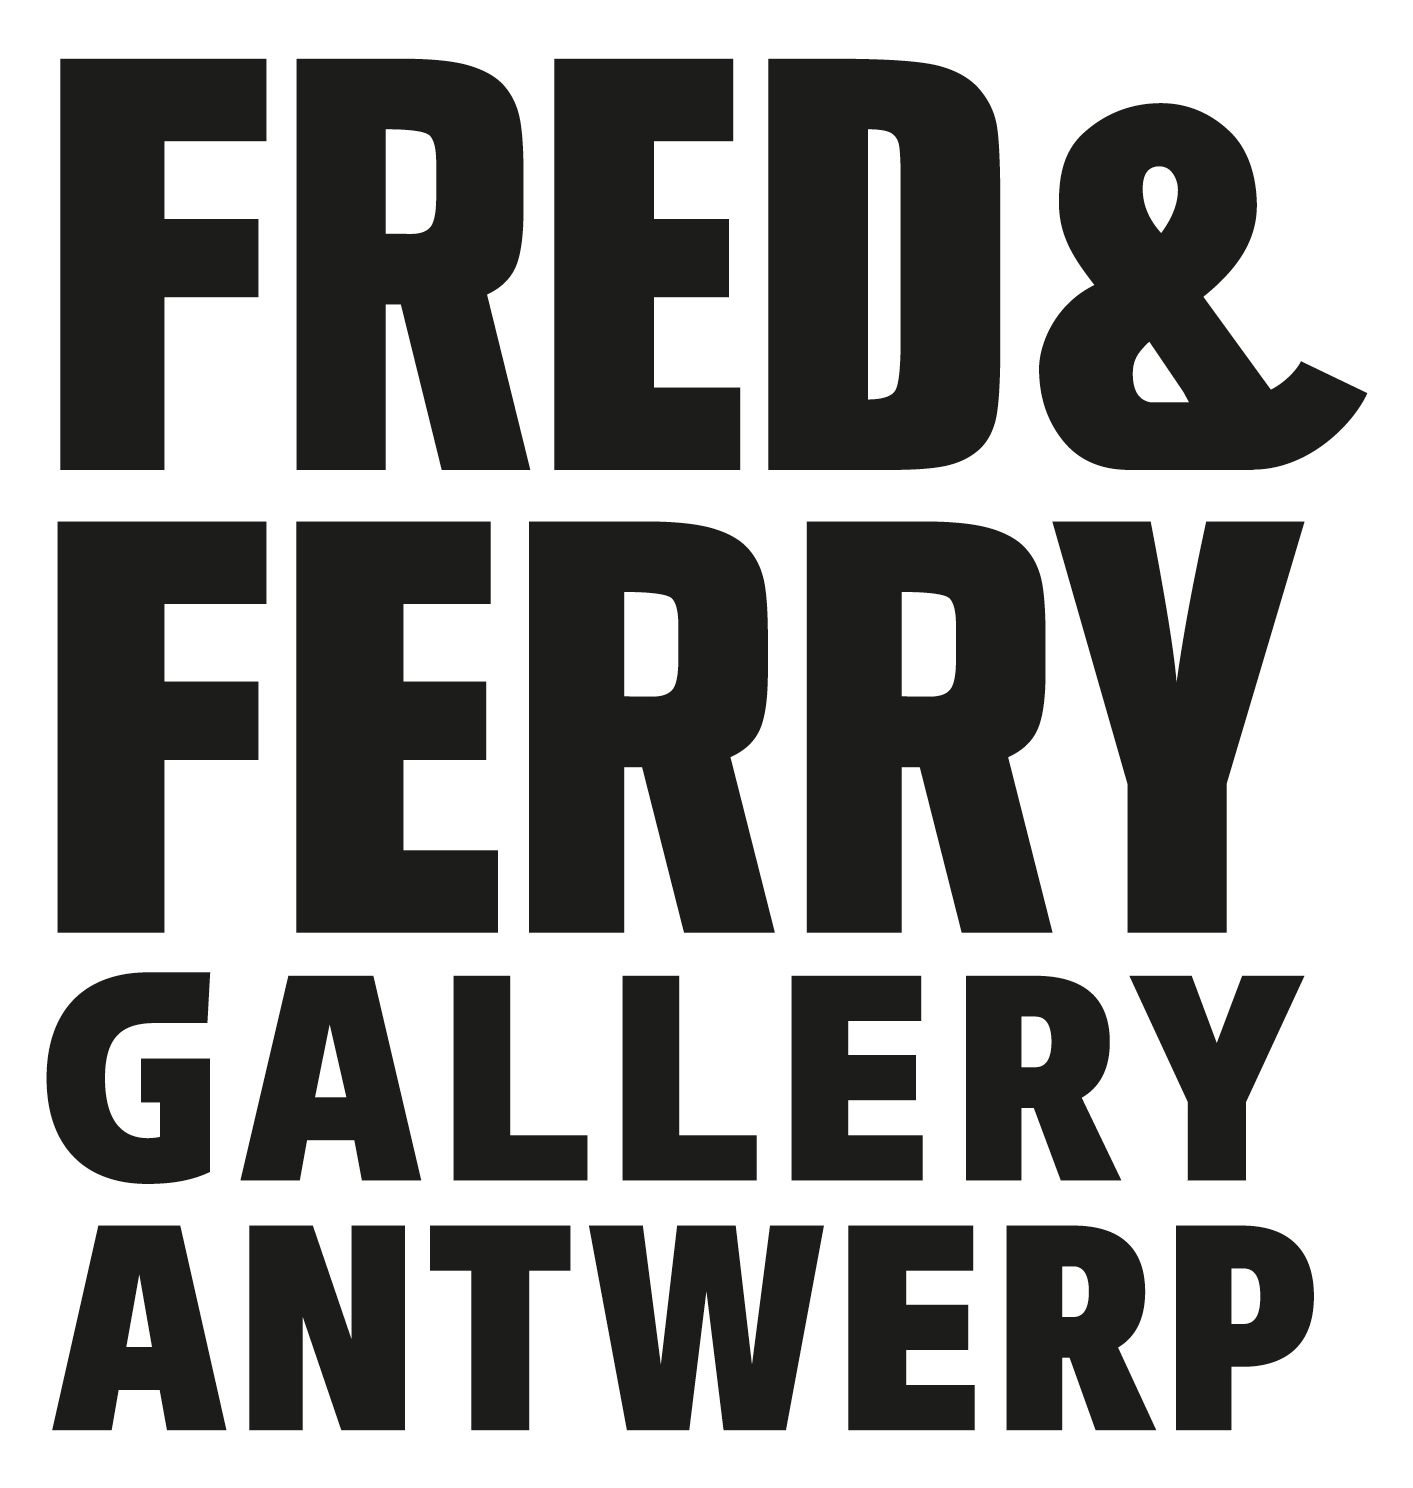 Fred & Ferry